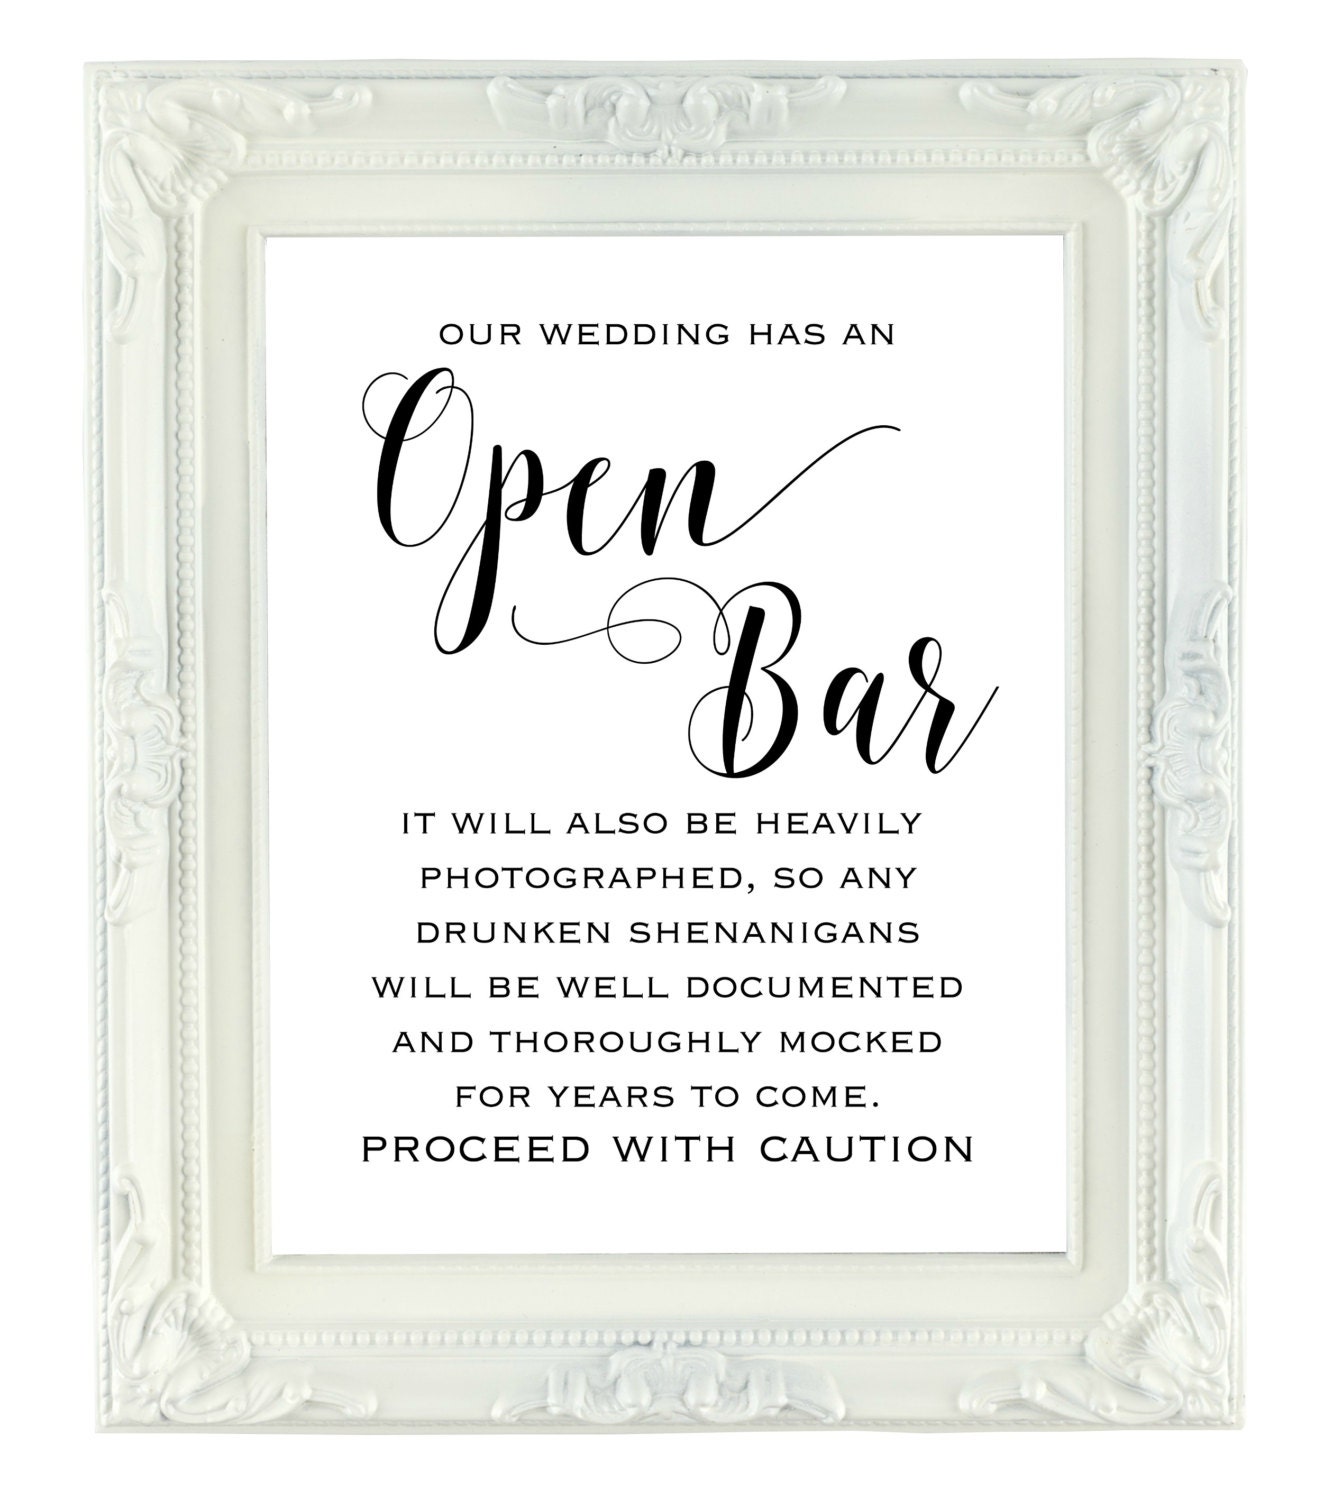 Open Bar Sign Wedding Bar Heavily Photographed Drunken